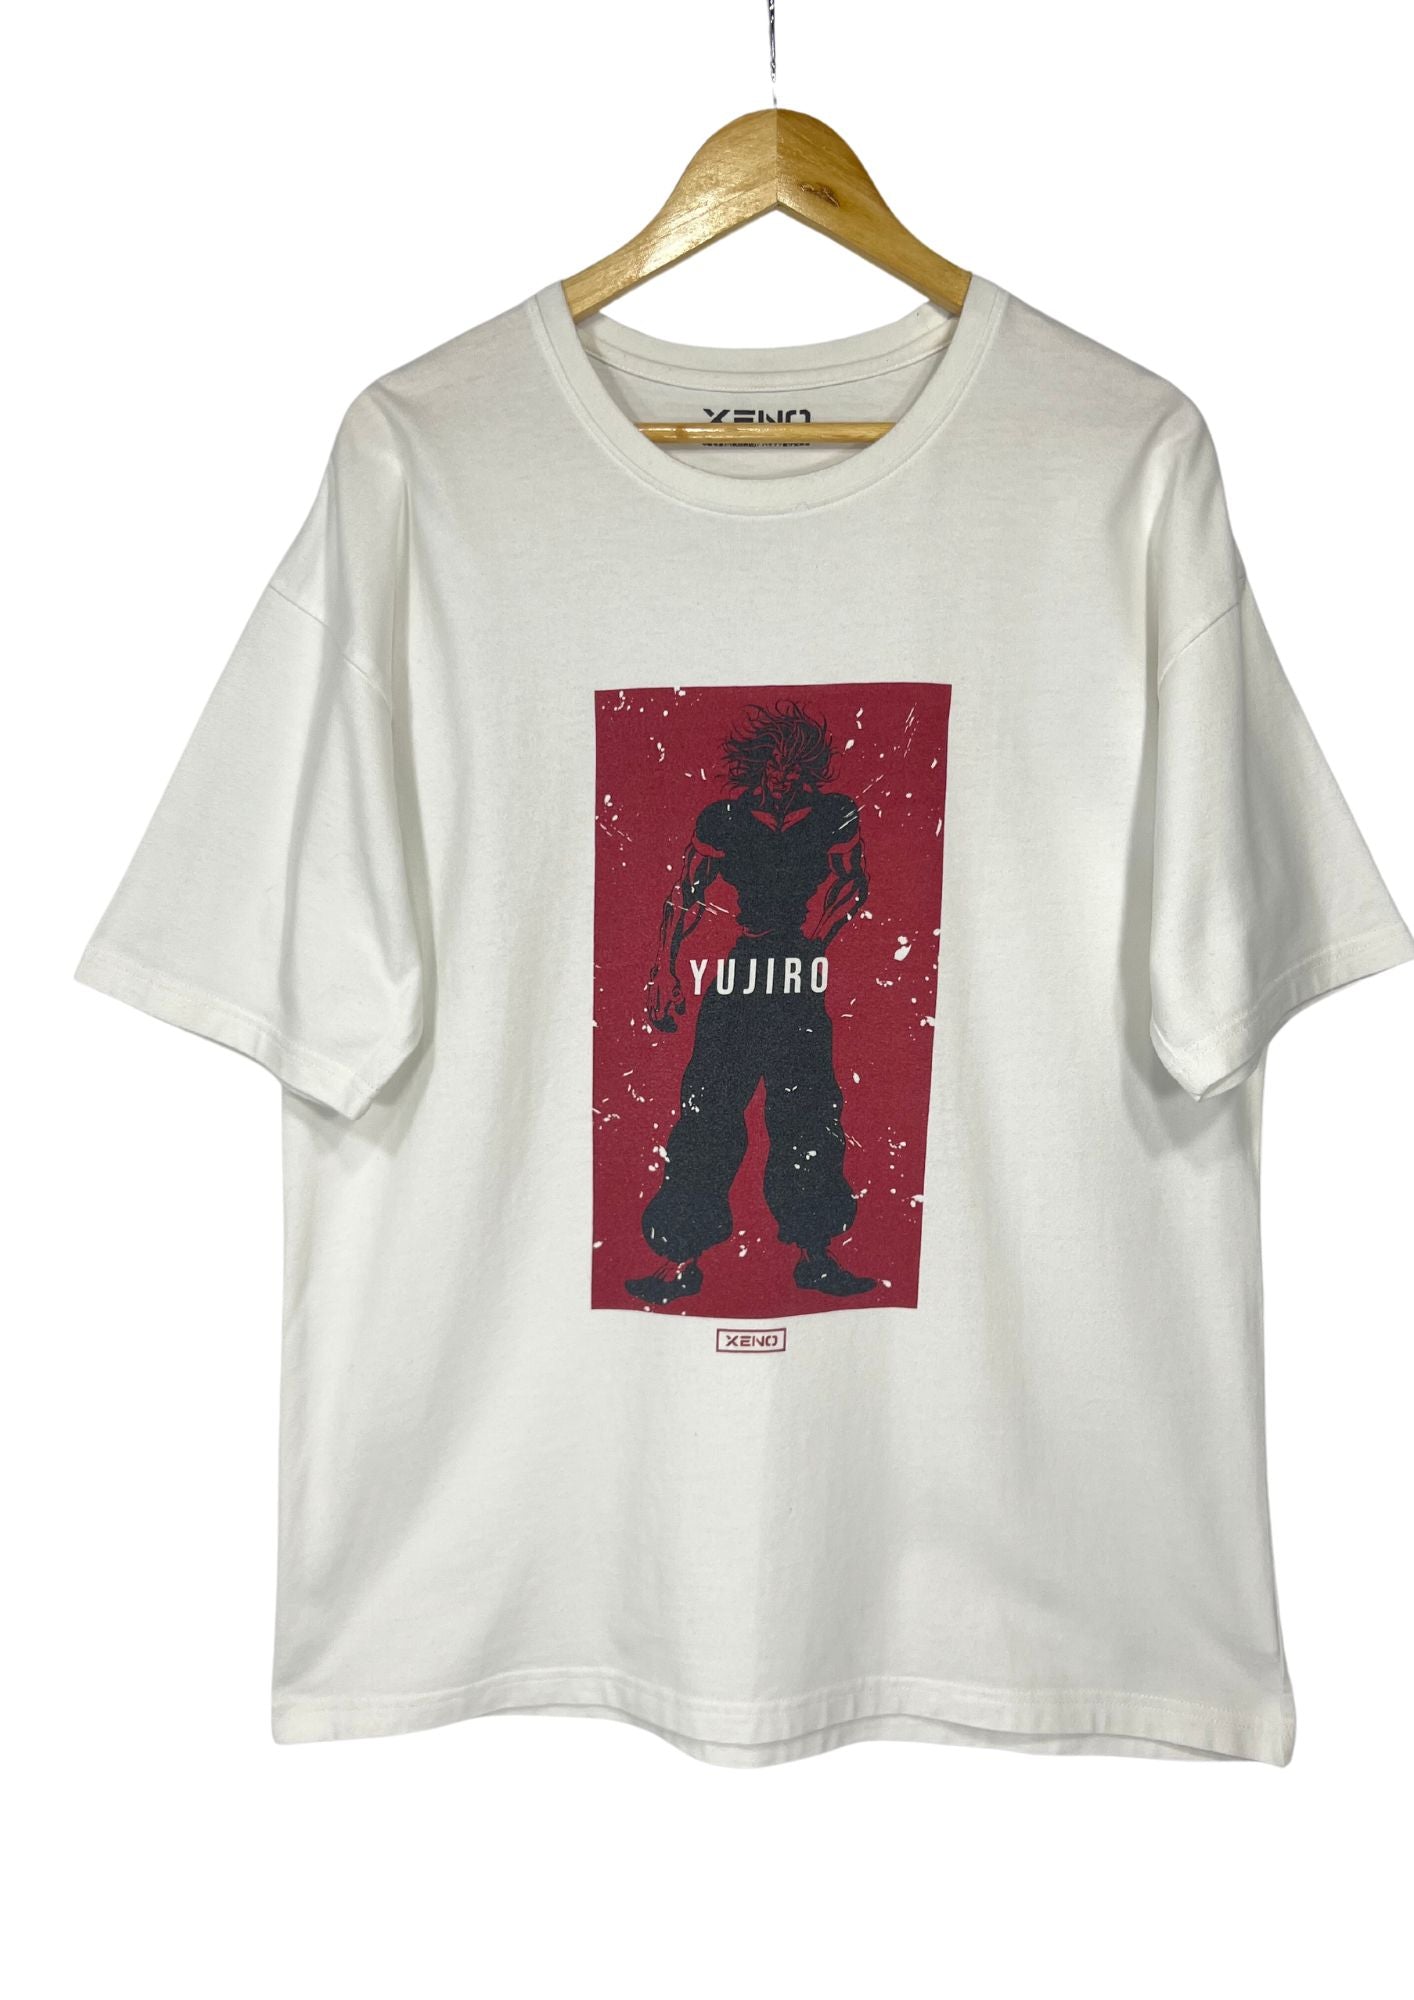 Baki The Grappler x Xeno Yujiro Hanma T-shirt